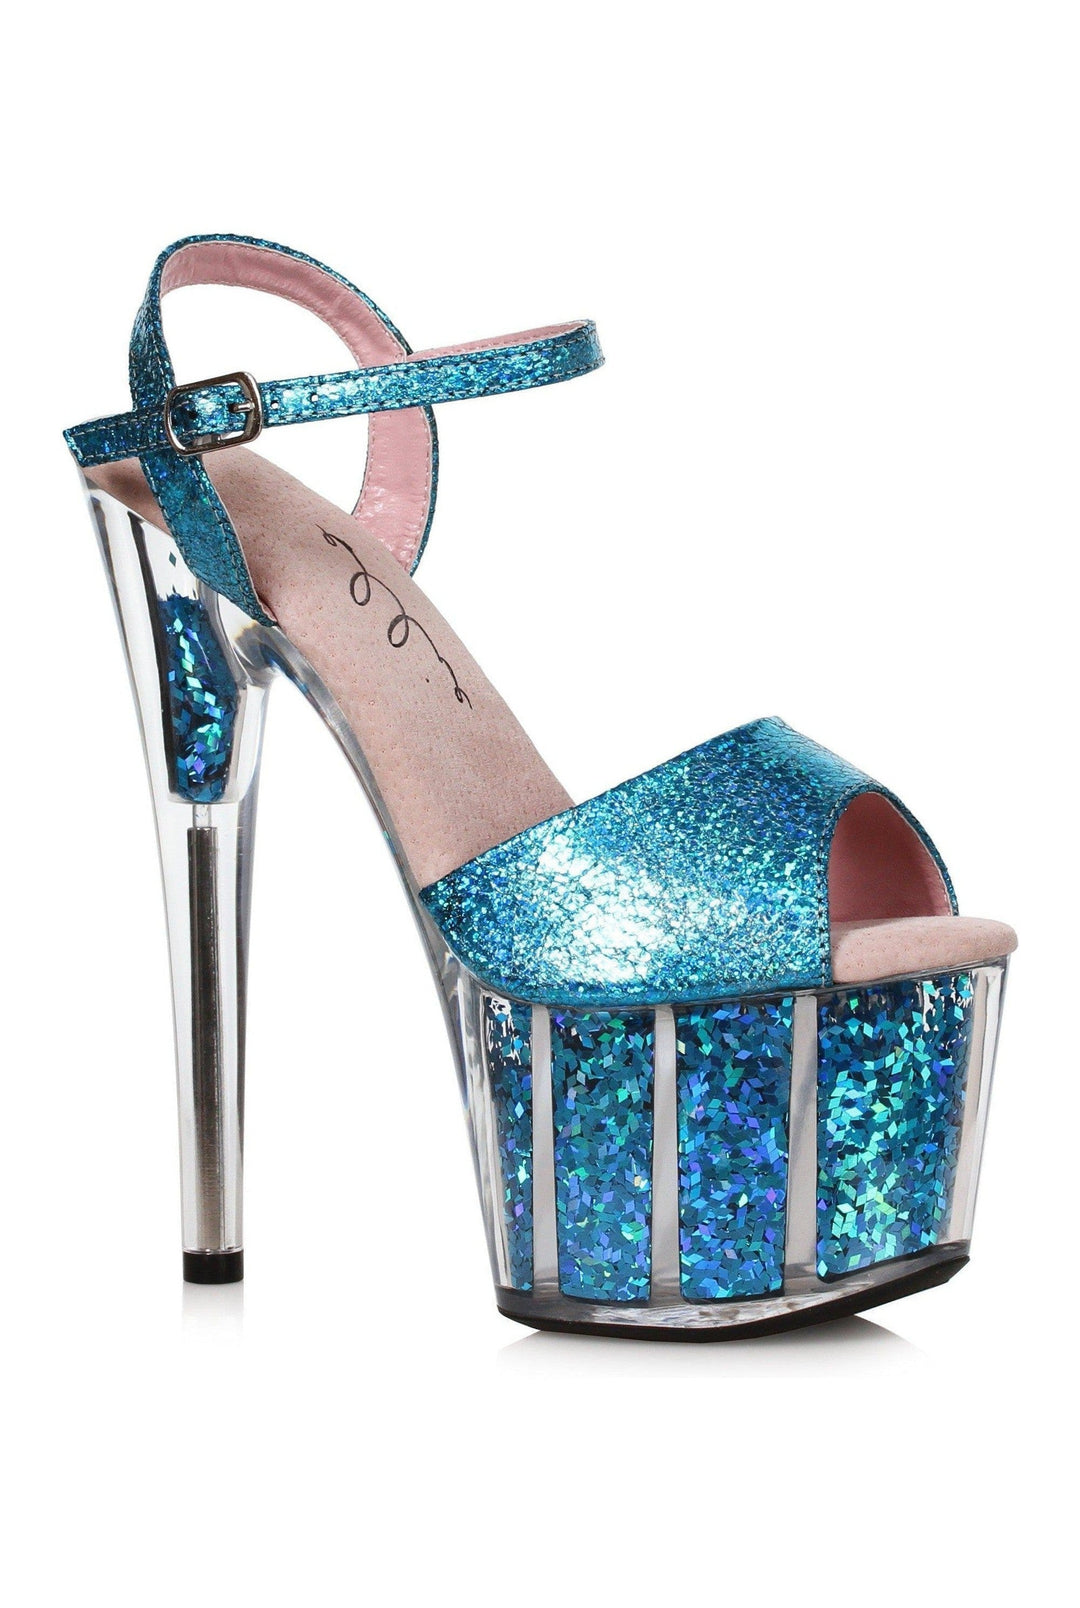 Ellie Shoes Blue Sandals Platform Stripper Shoes | Buy at Sexyshoes.com